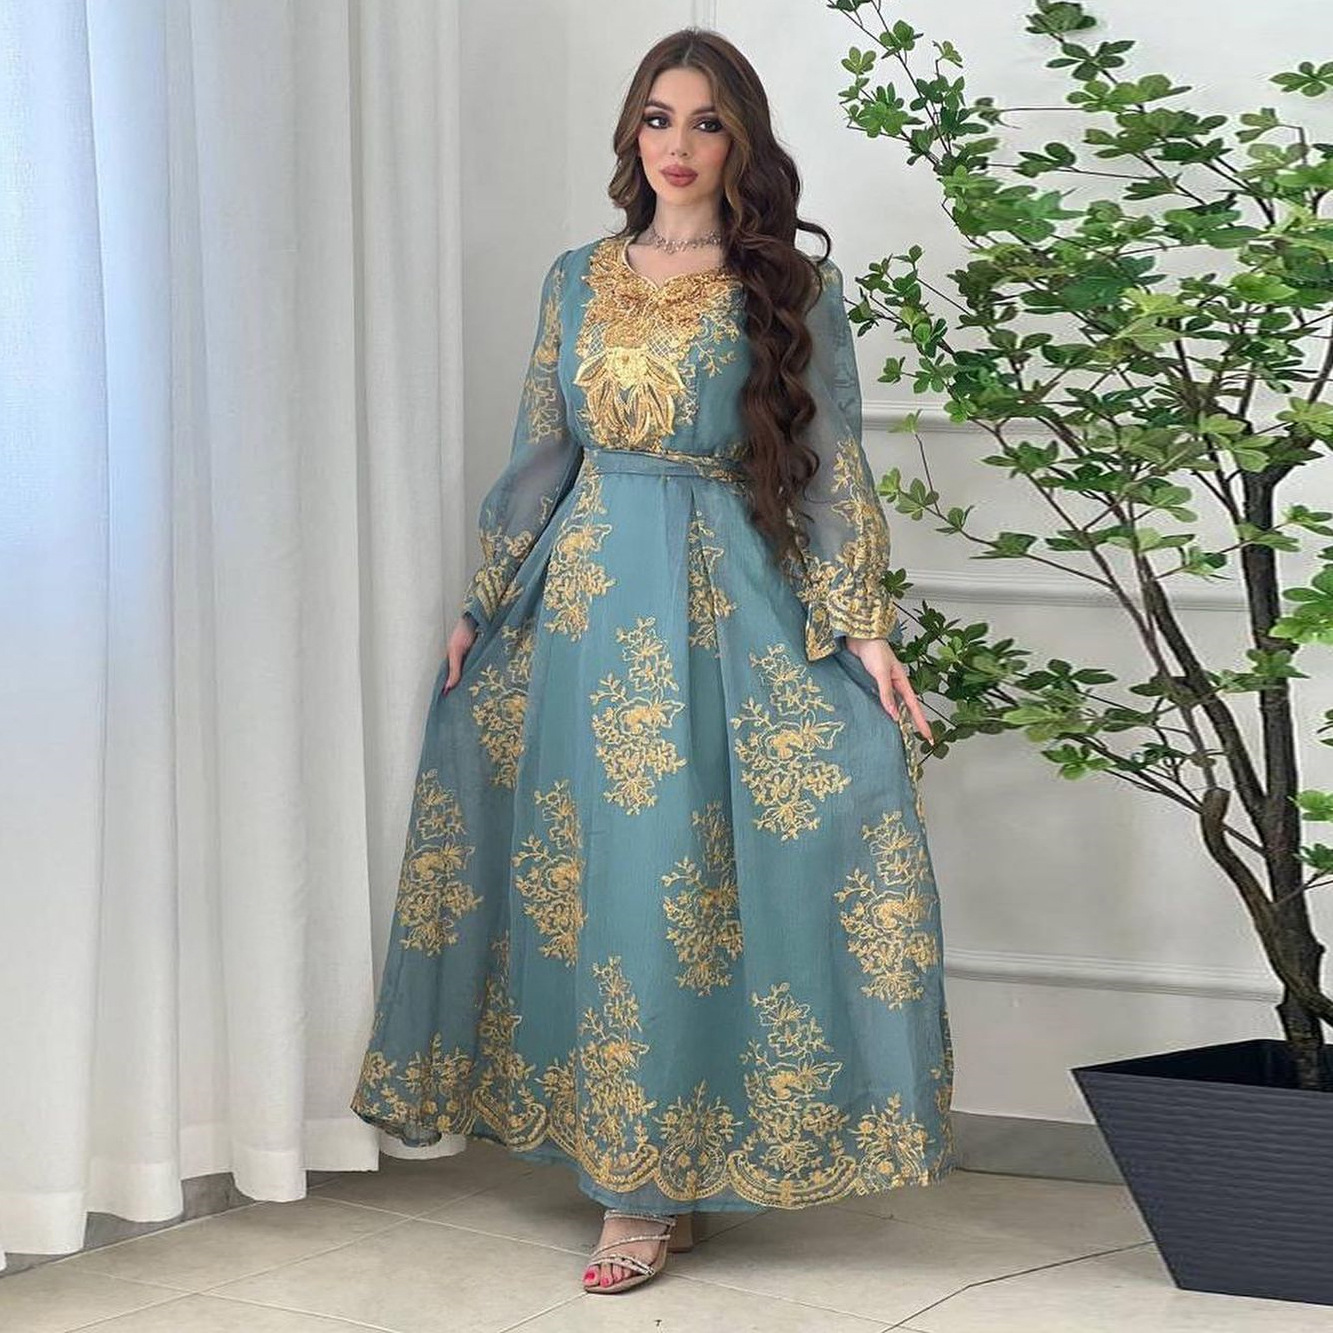 Jalabiya Embrace elegance with an embroidered jalabiya adorned with appliques | a floor-length evening robe | a waist-cinching belt | and an aura of grace